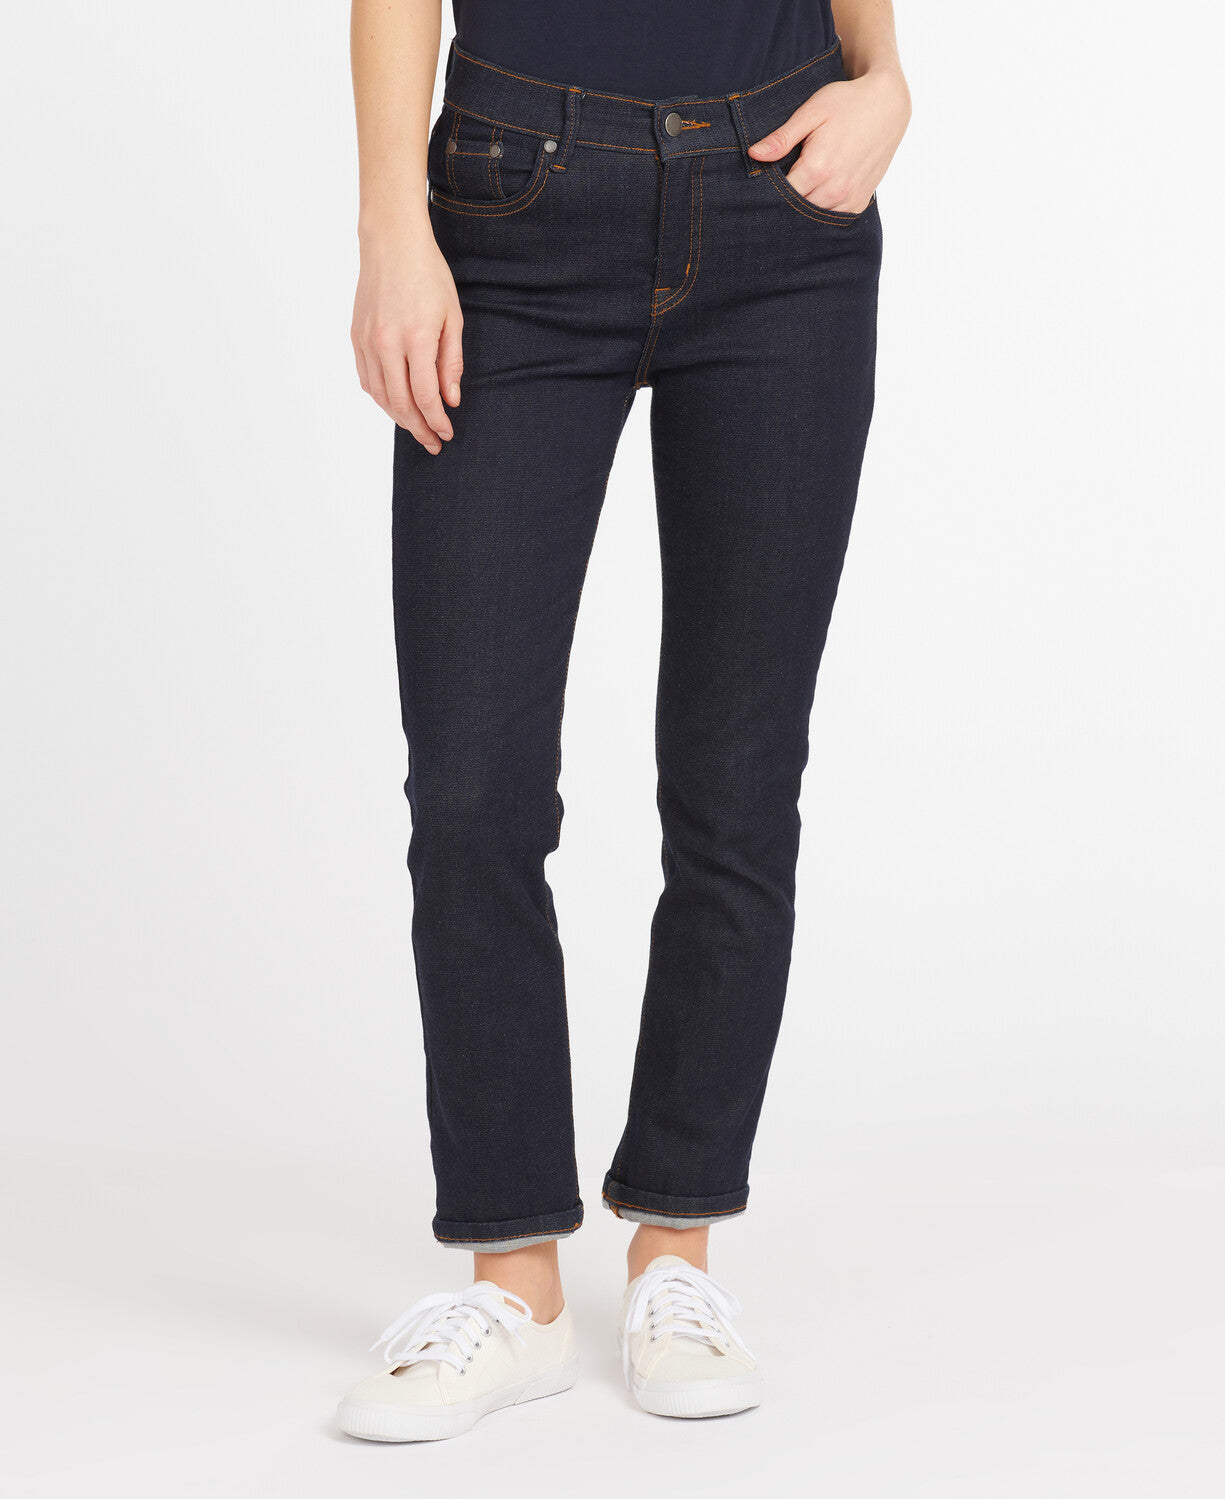 Barbour Women’s Essential Slim Jeans - Rinse